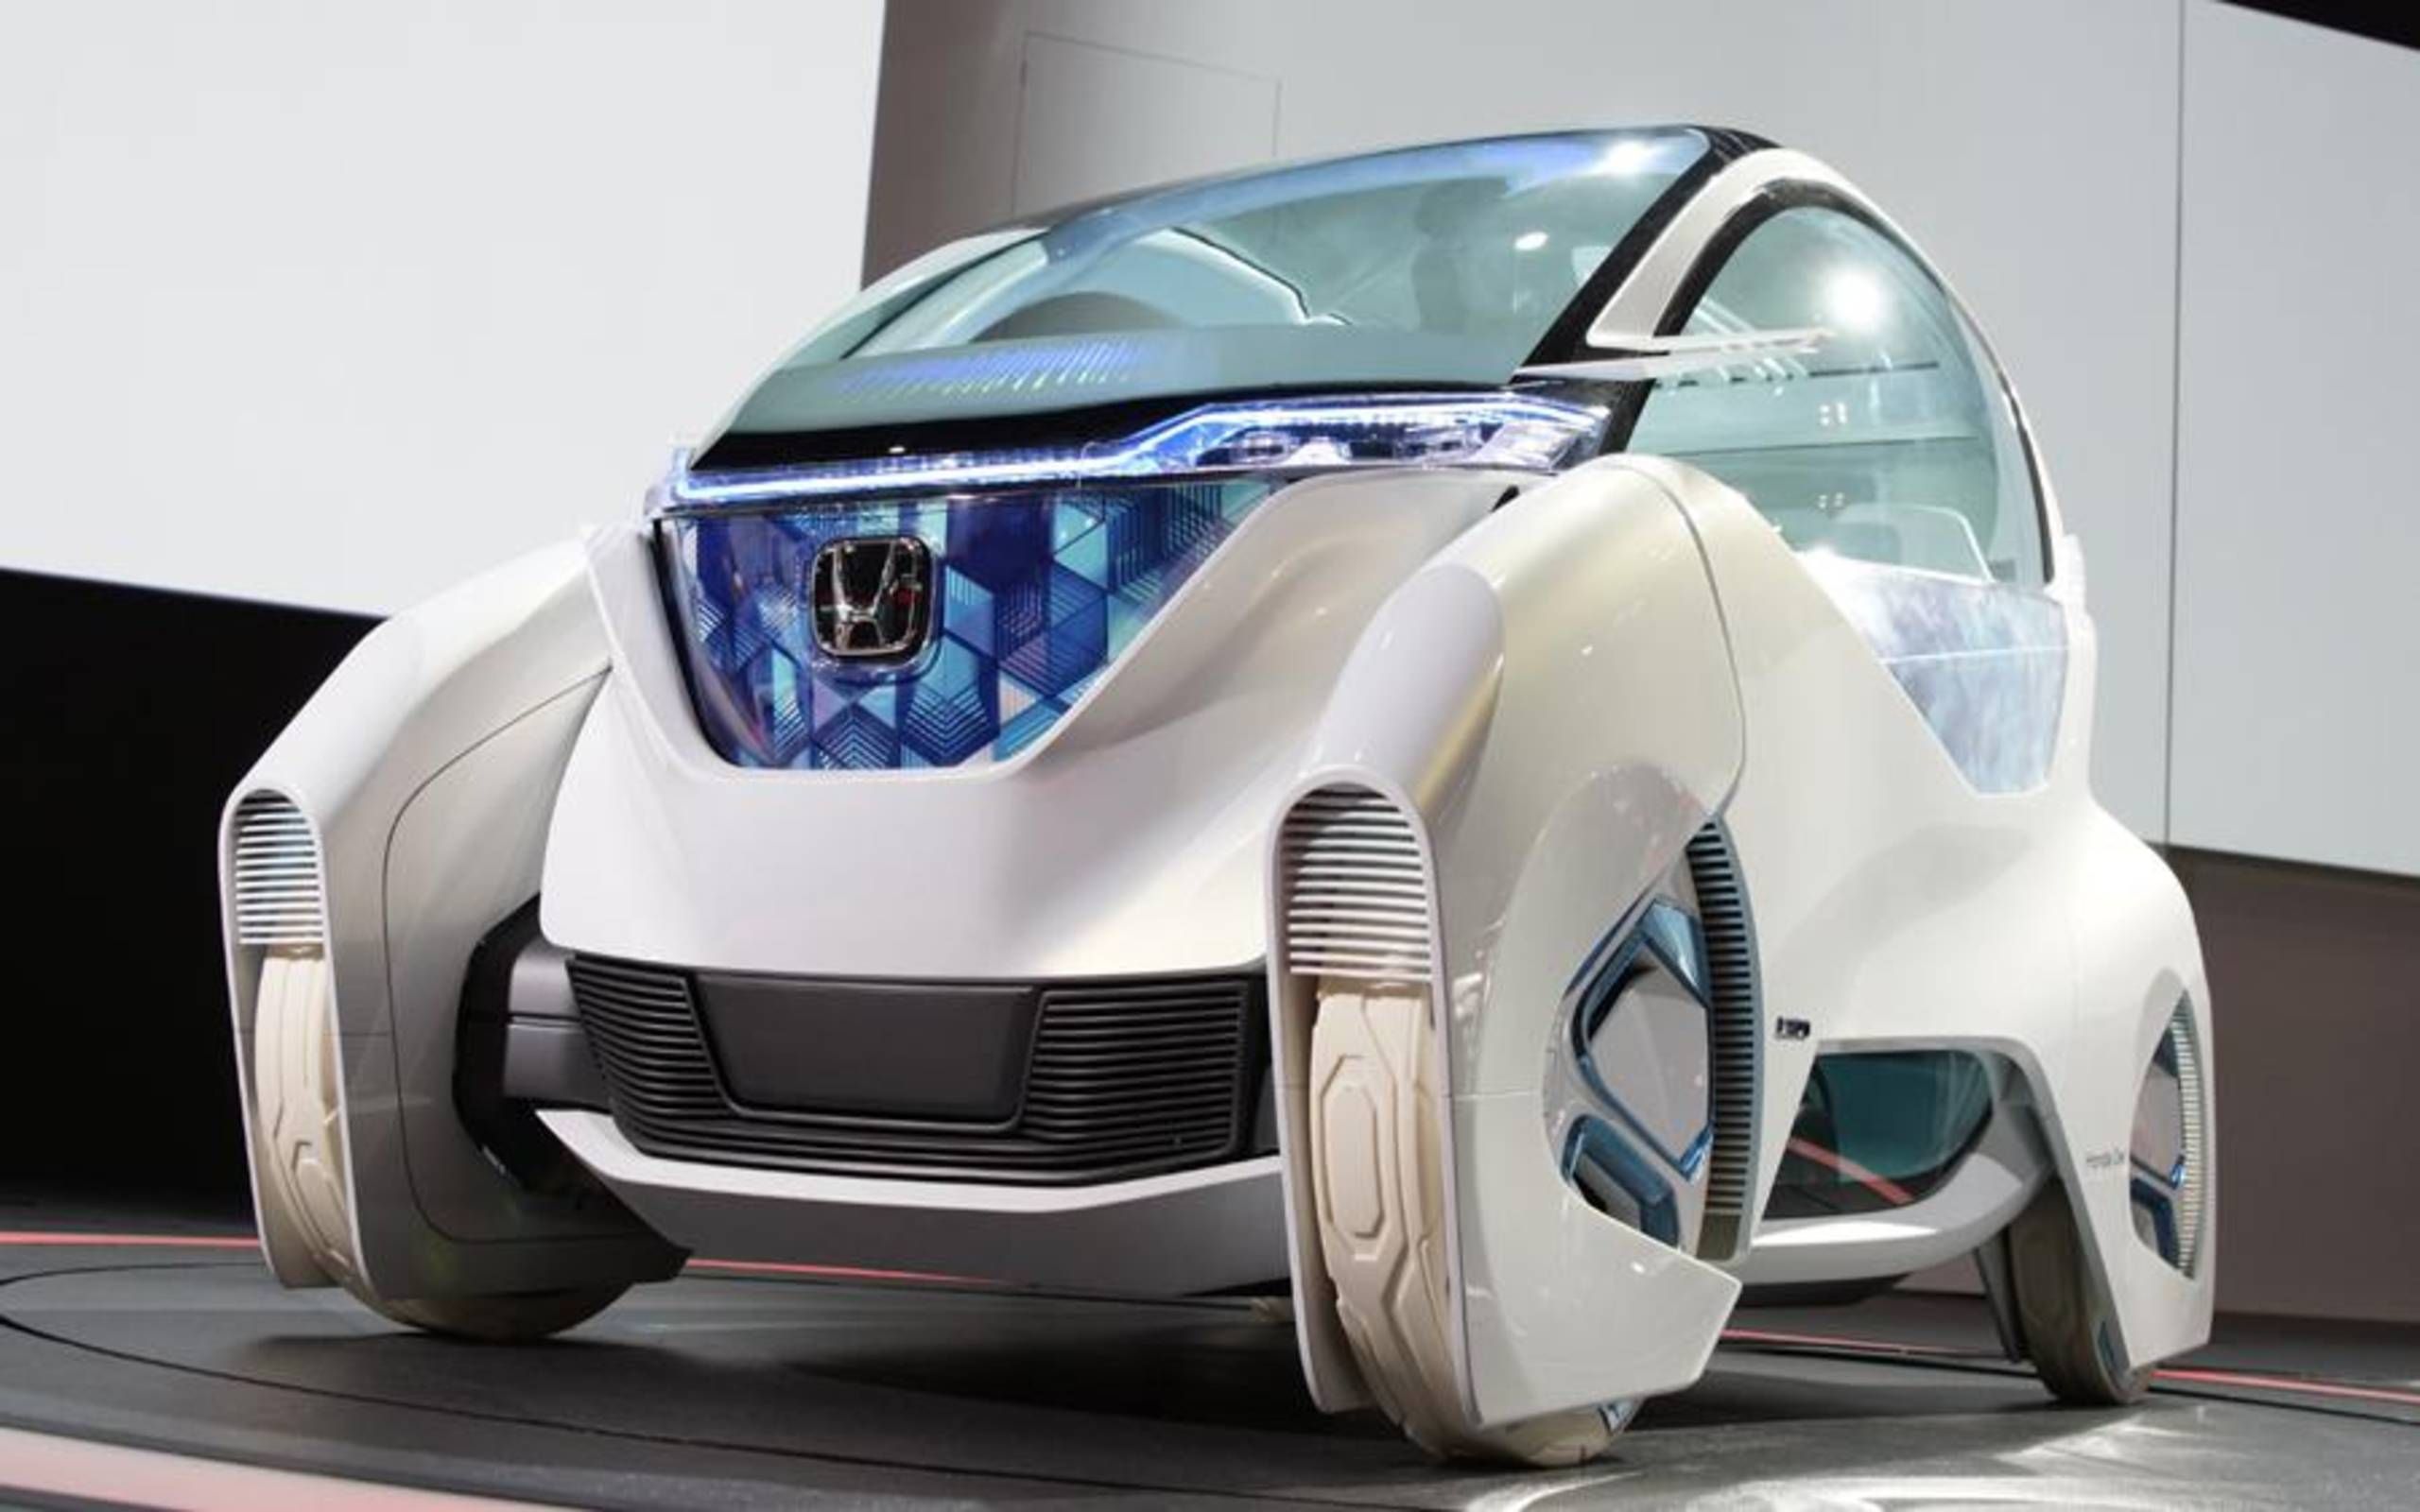 Амбер авто электромобиль. Honda Micro Commuter Concept. Электромобиль Honda Micro Commuter Concept. Honda электромобиль 2022. Рено электромобиль 2022.